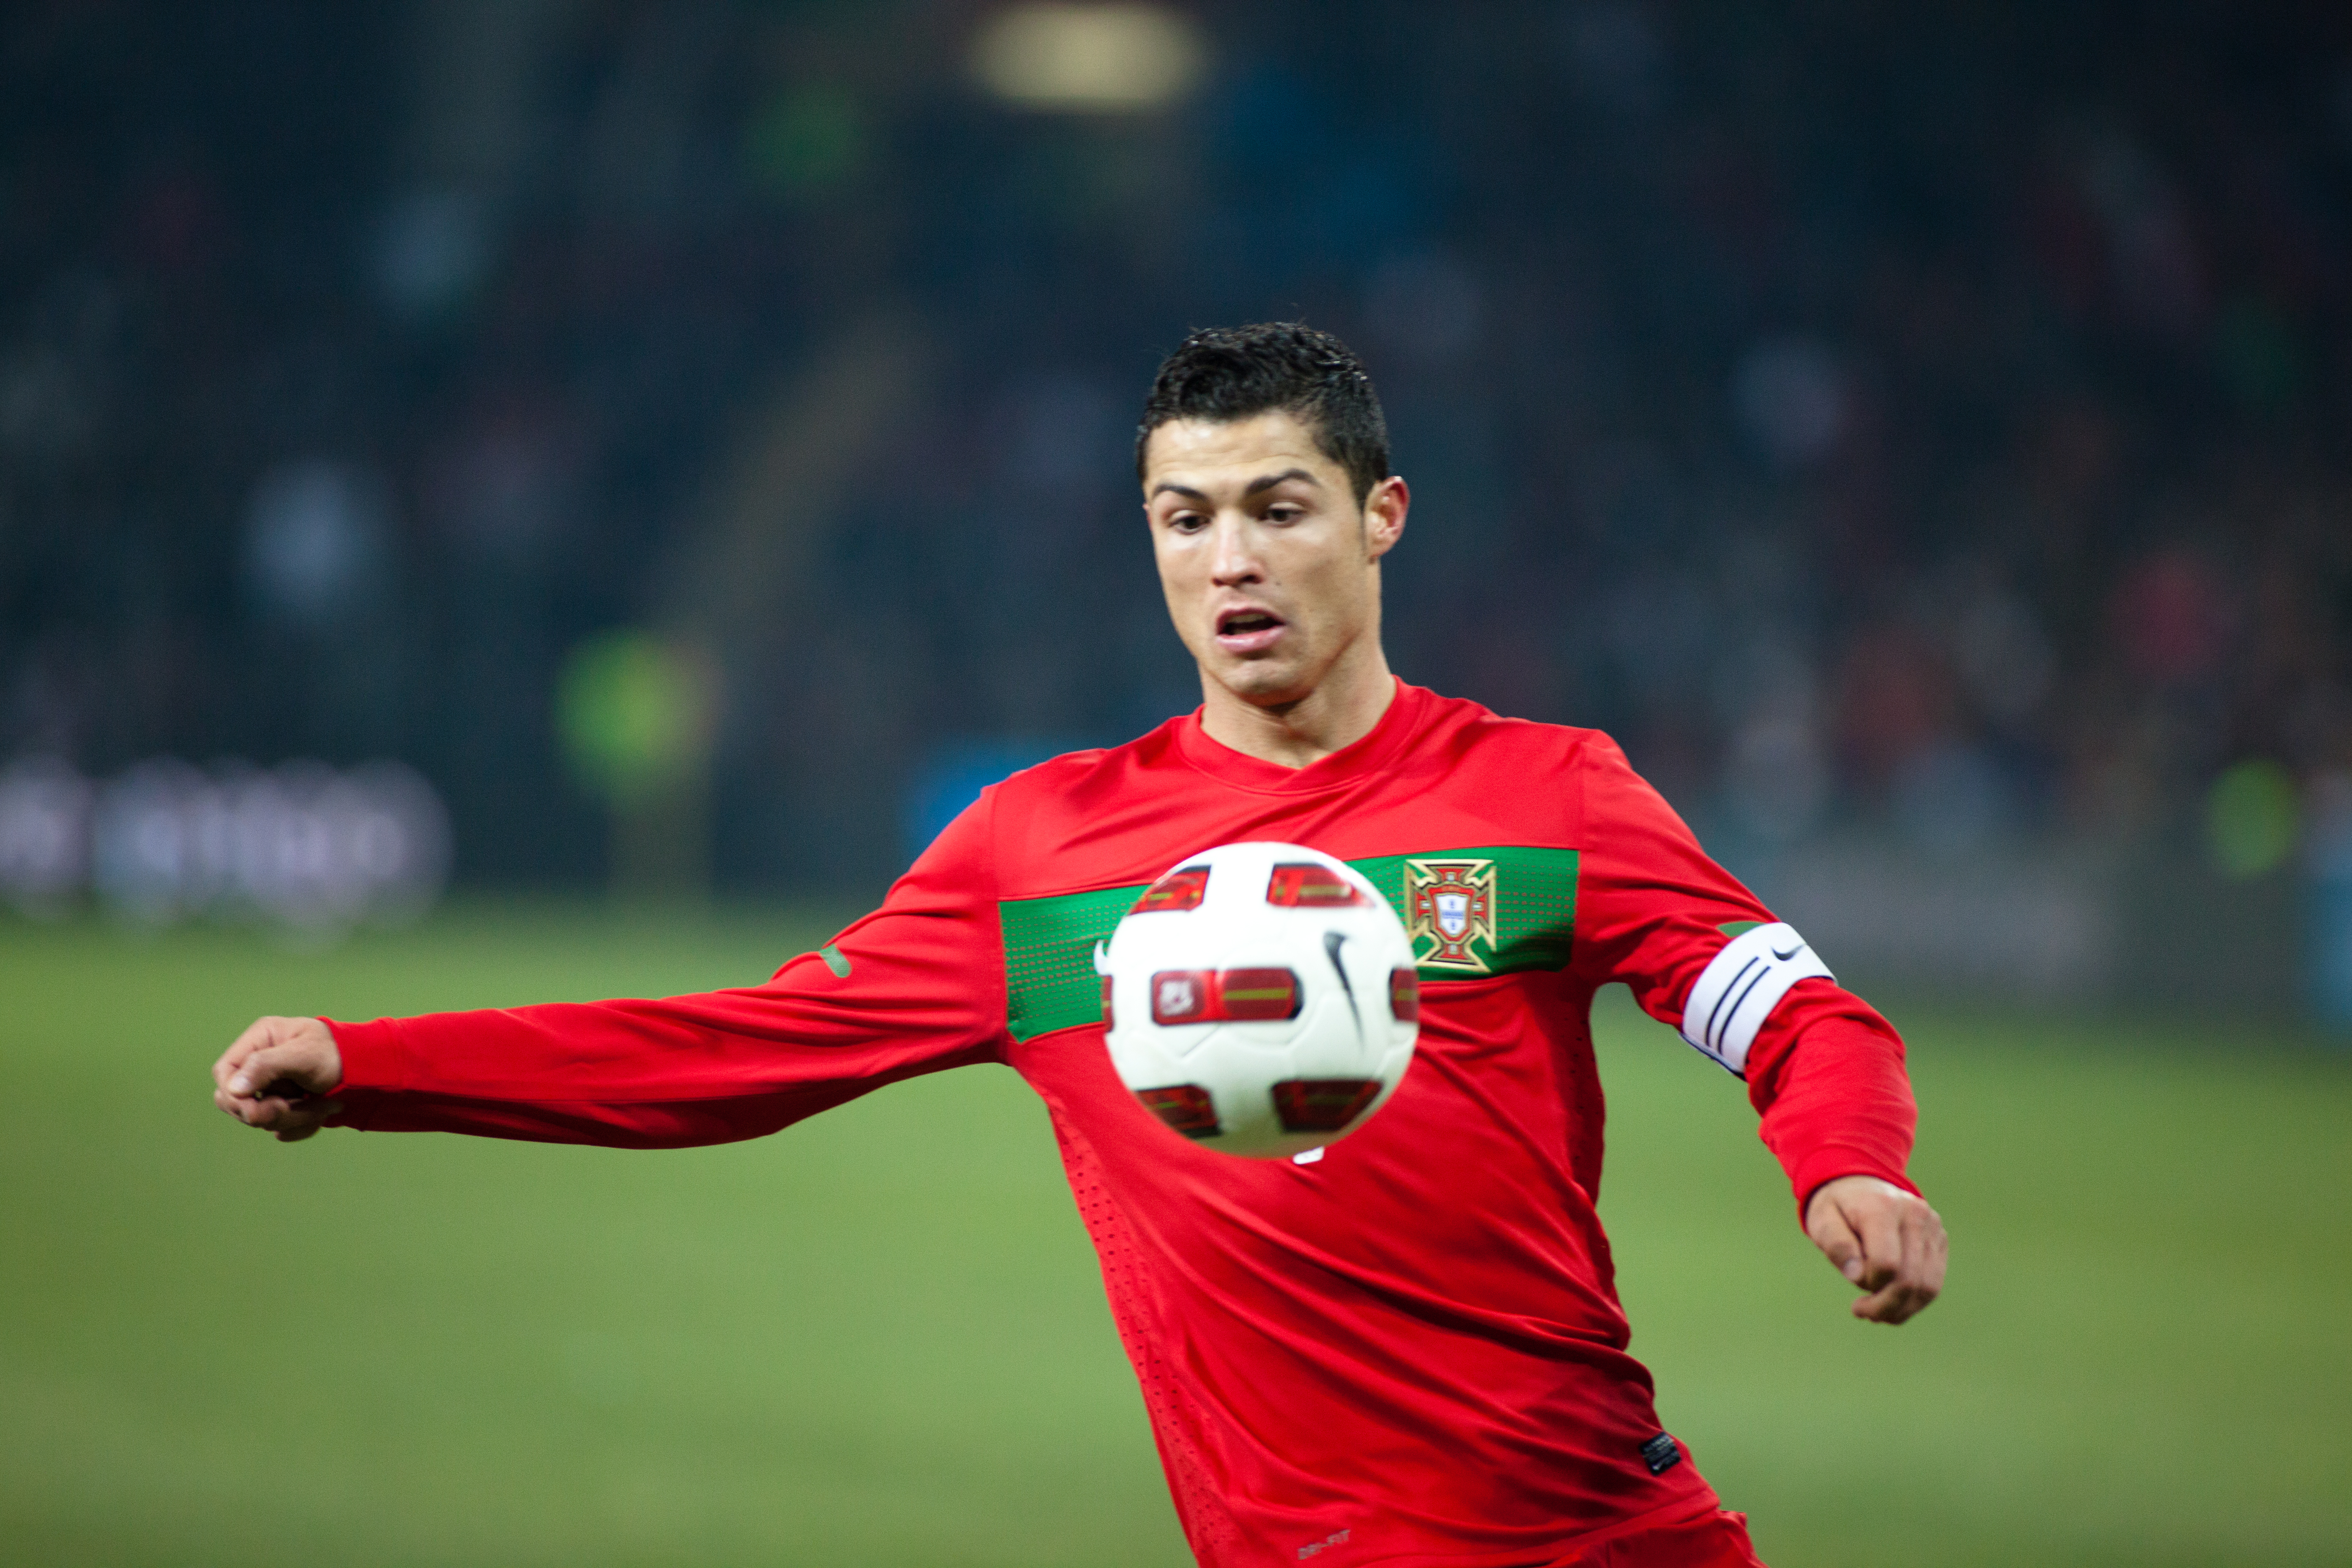 Cristiano_Ronaldo_In_Action